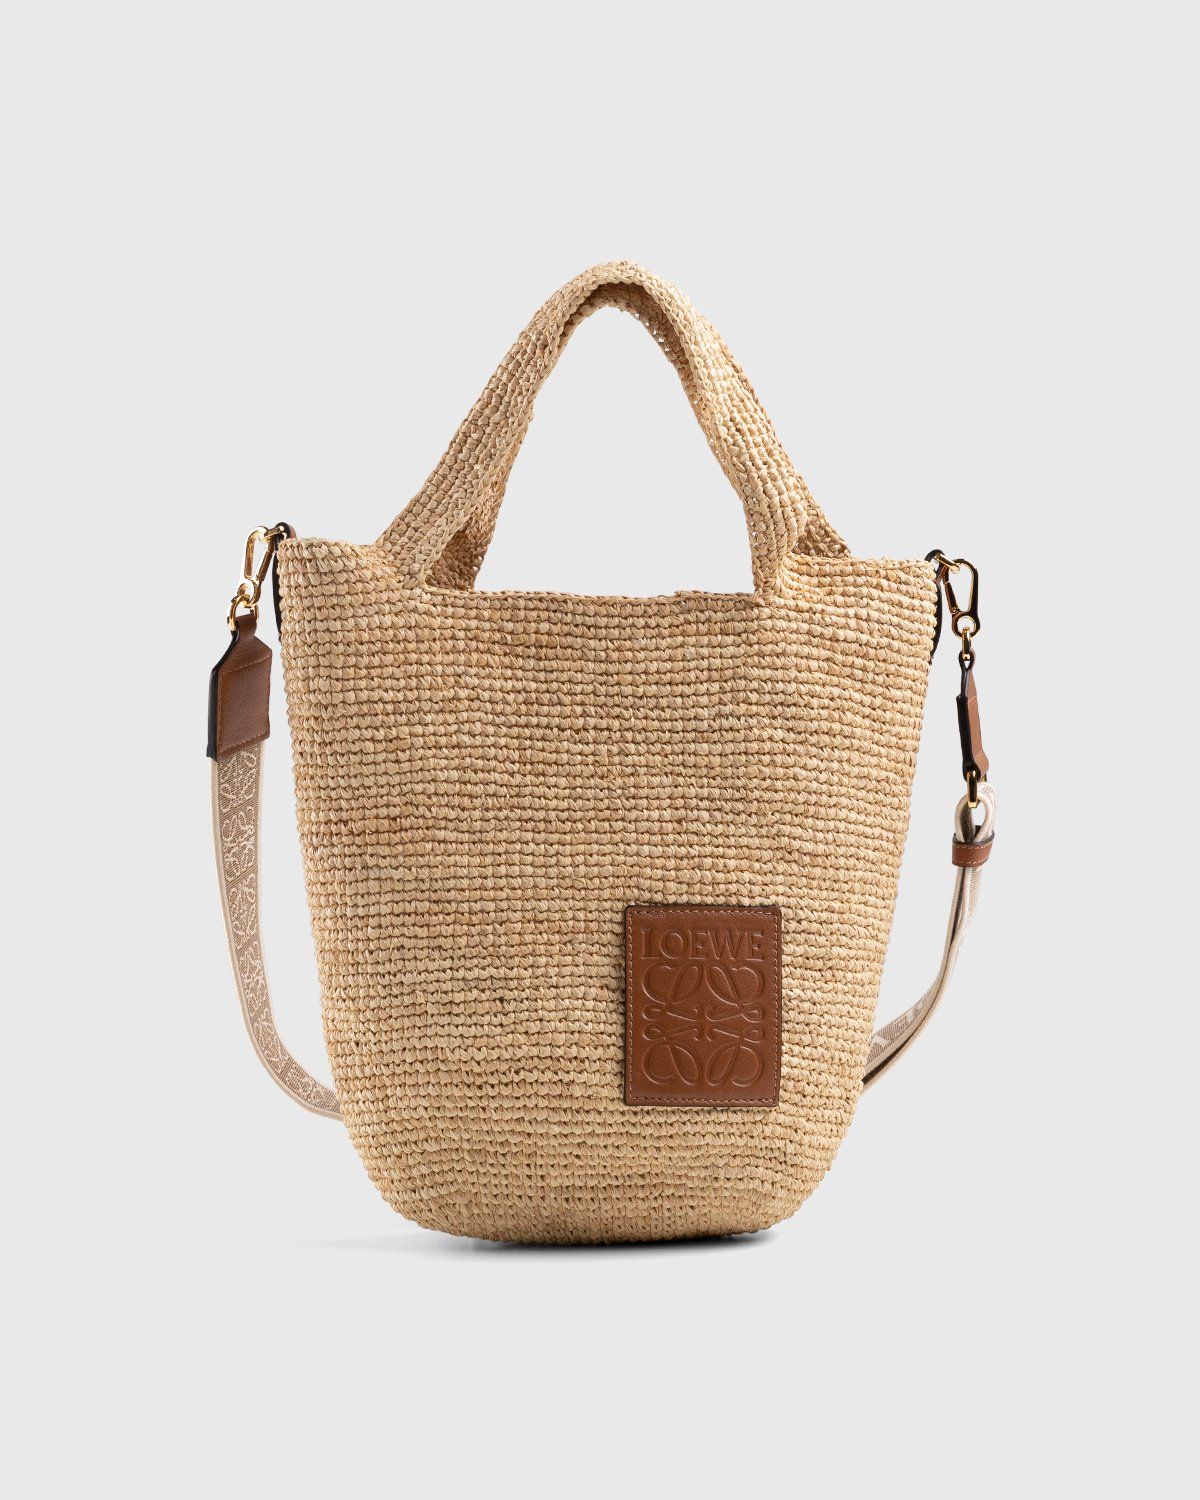 Shop LOEWE Drawstring bucket bag in palm leaf and calfskin